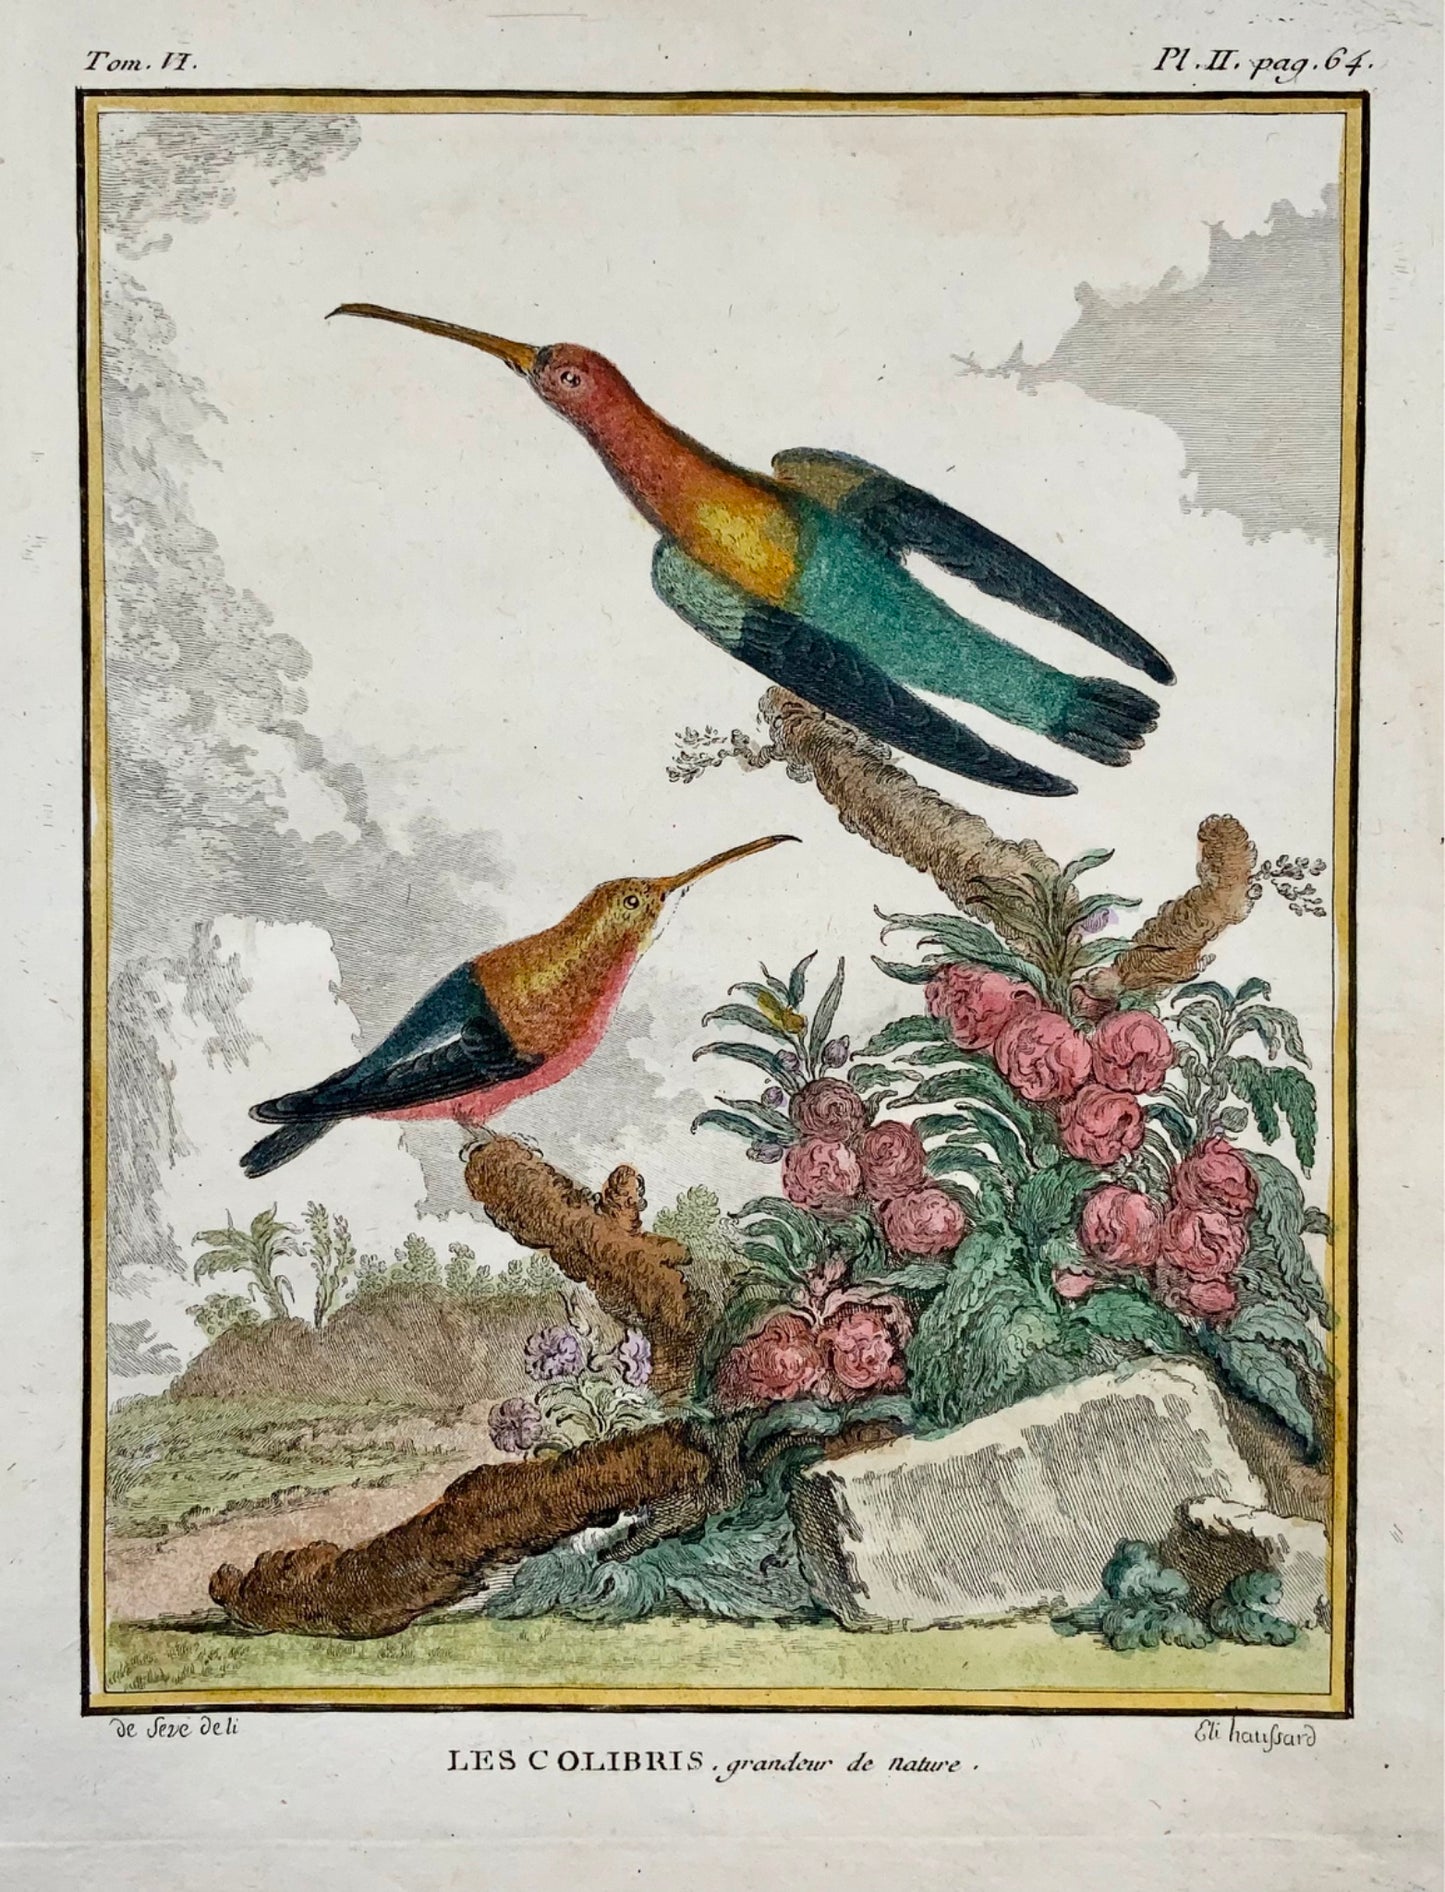 1779 de Seve; Colibri HUMMINGBIRDS - Ornithology - 4to Large Edn engraving